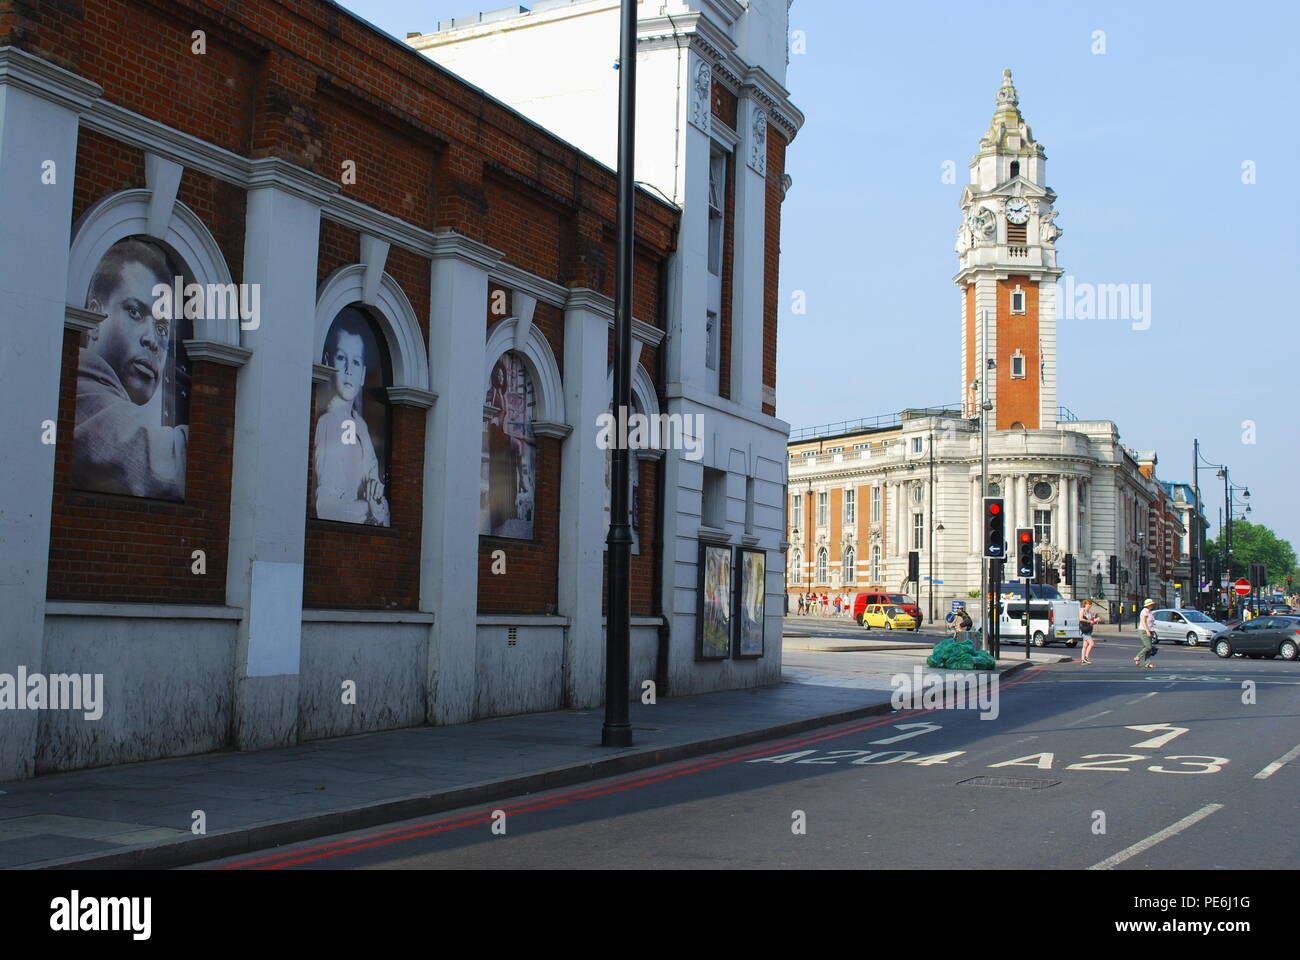 Lambeth Rathaus und den Ritzy Kino in Brixton, London Stockfoto